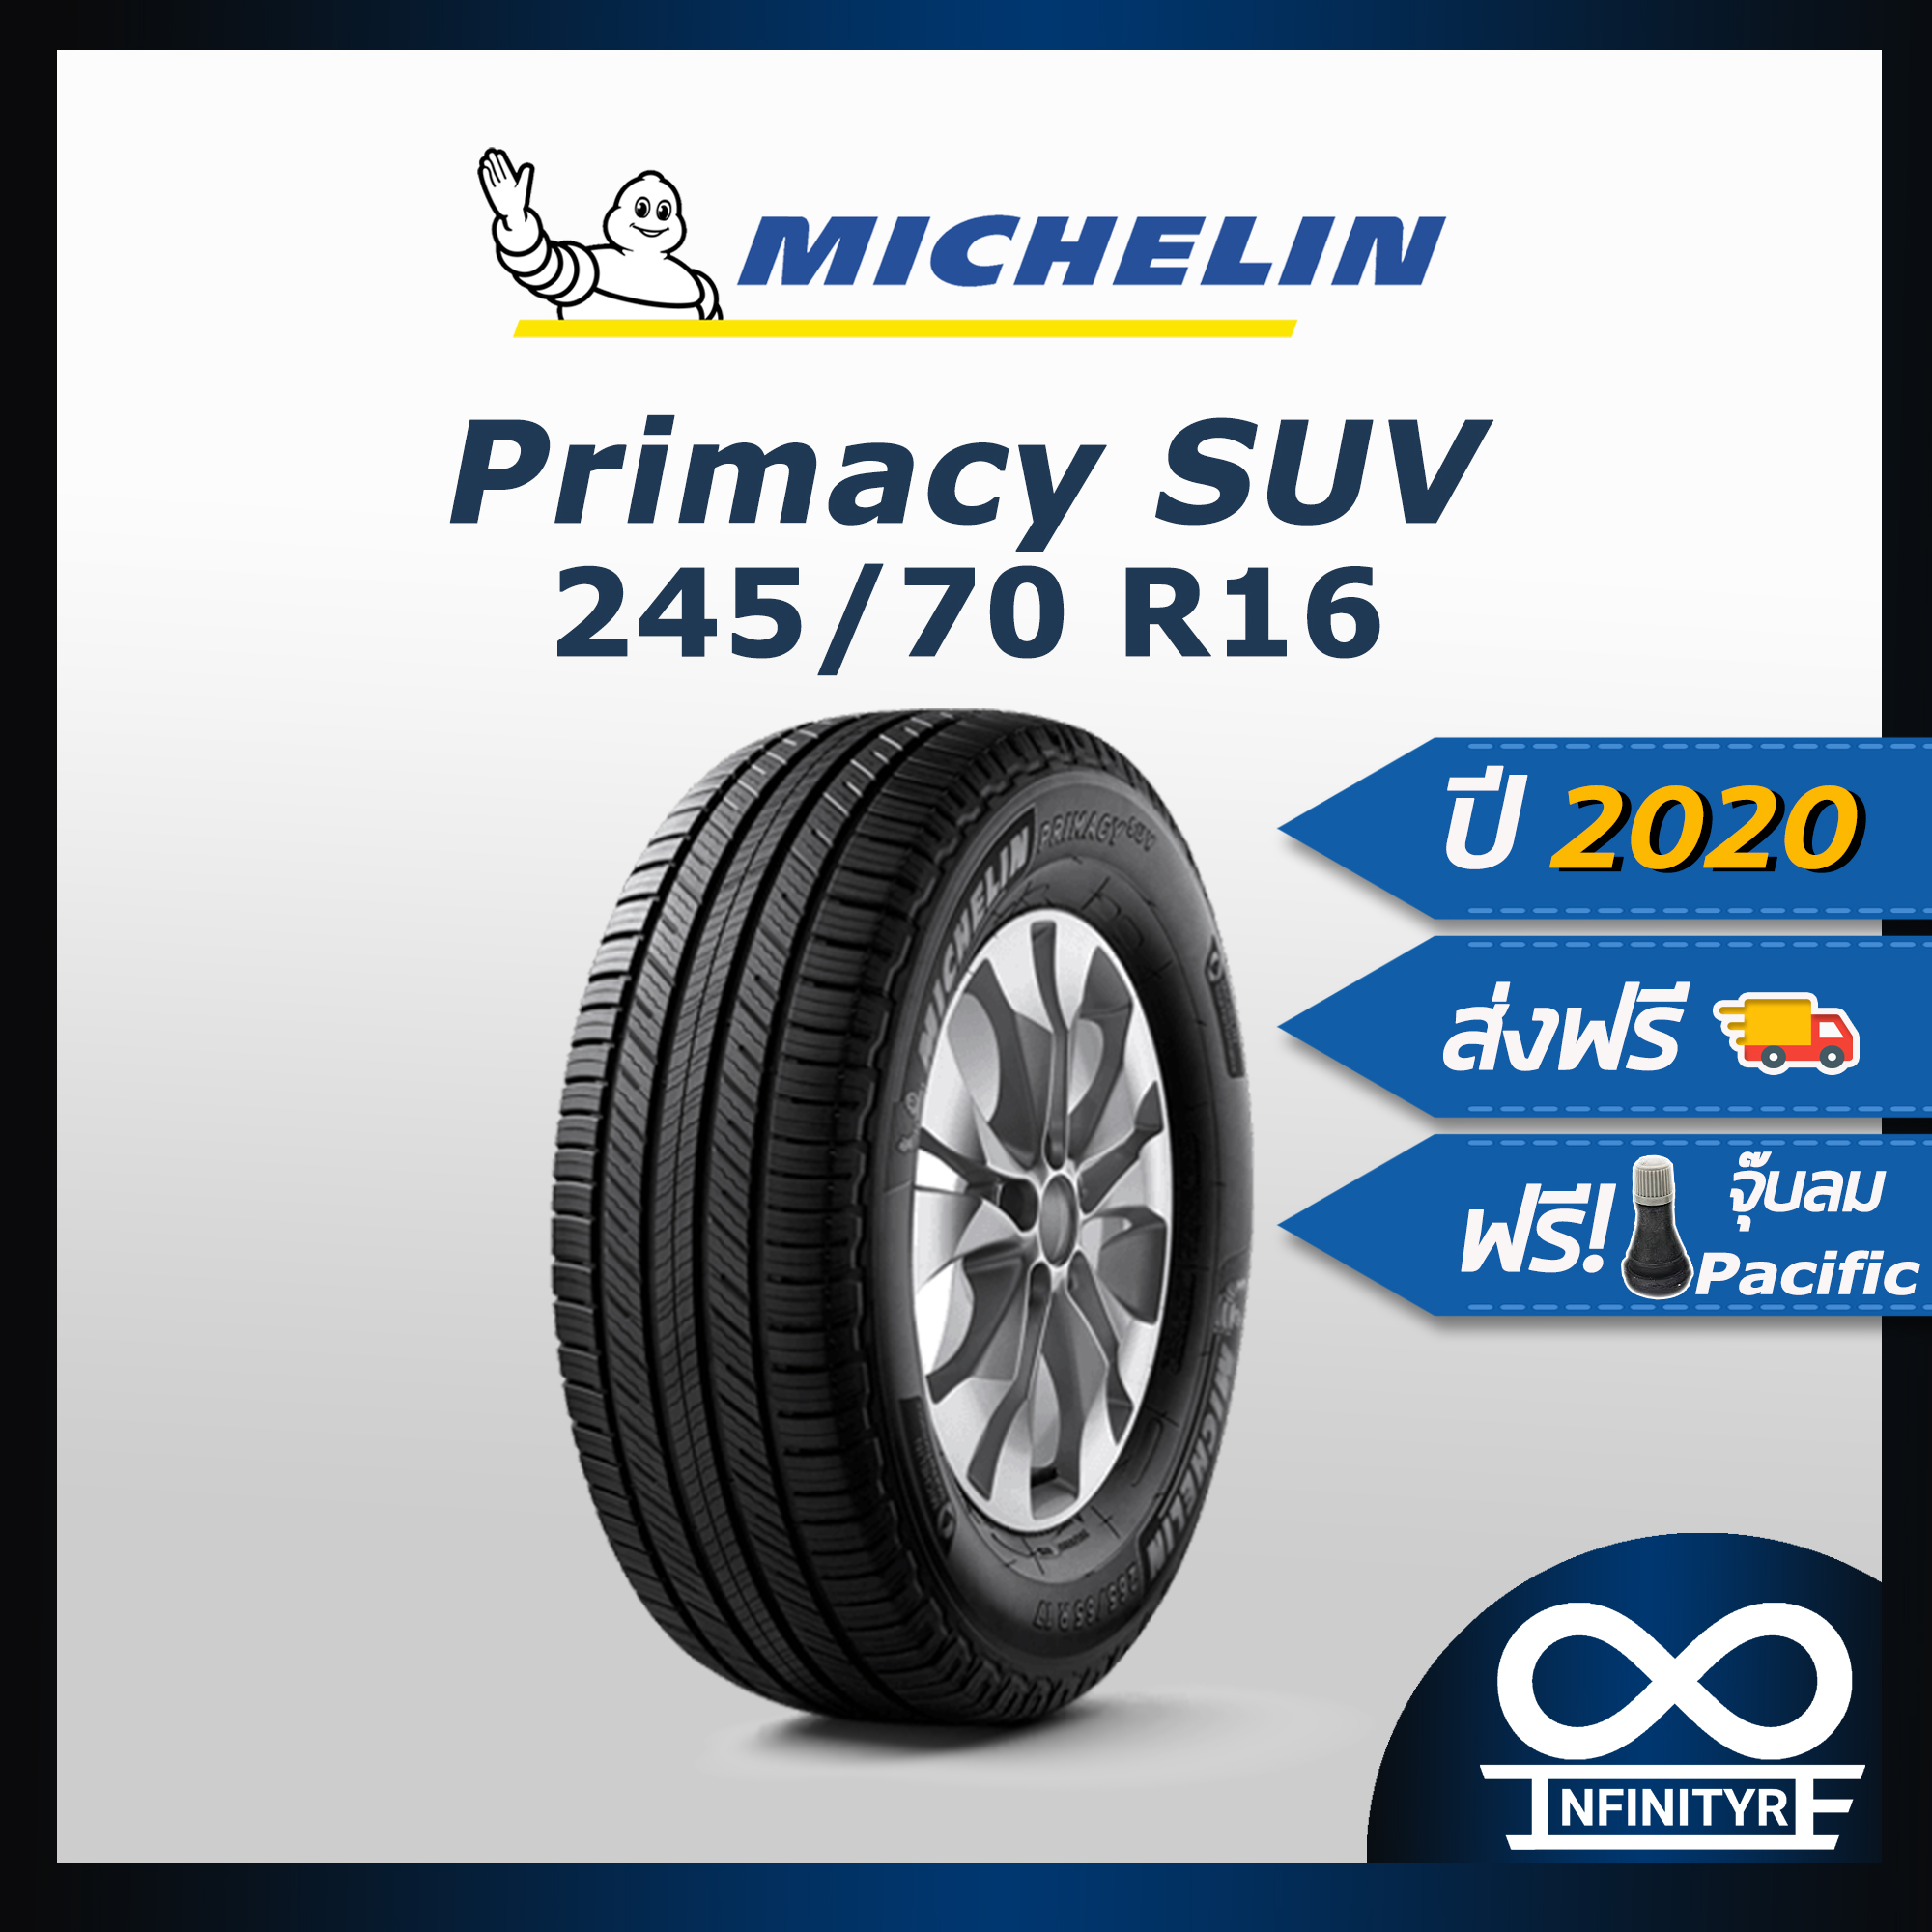 245/70R16 Michelin มิชลิน รุ่น Primacy SUV (ปี2020) 1 เส้น ฟรี! จุ๊บลมPacific เกรดพรีเมี่ยม